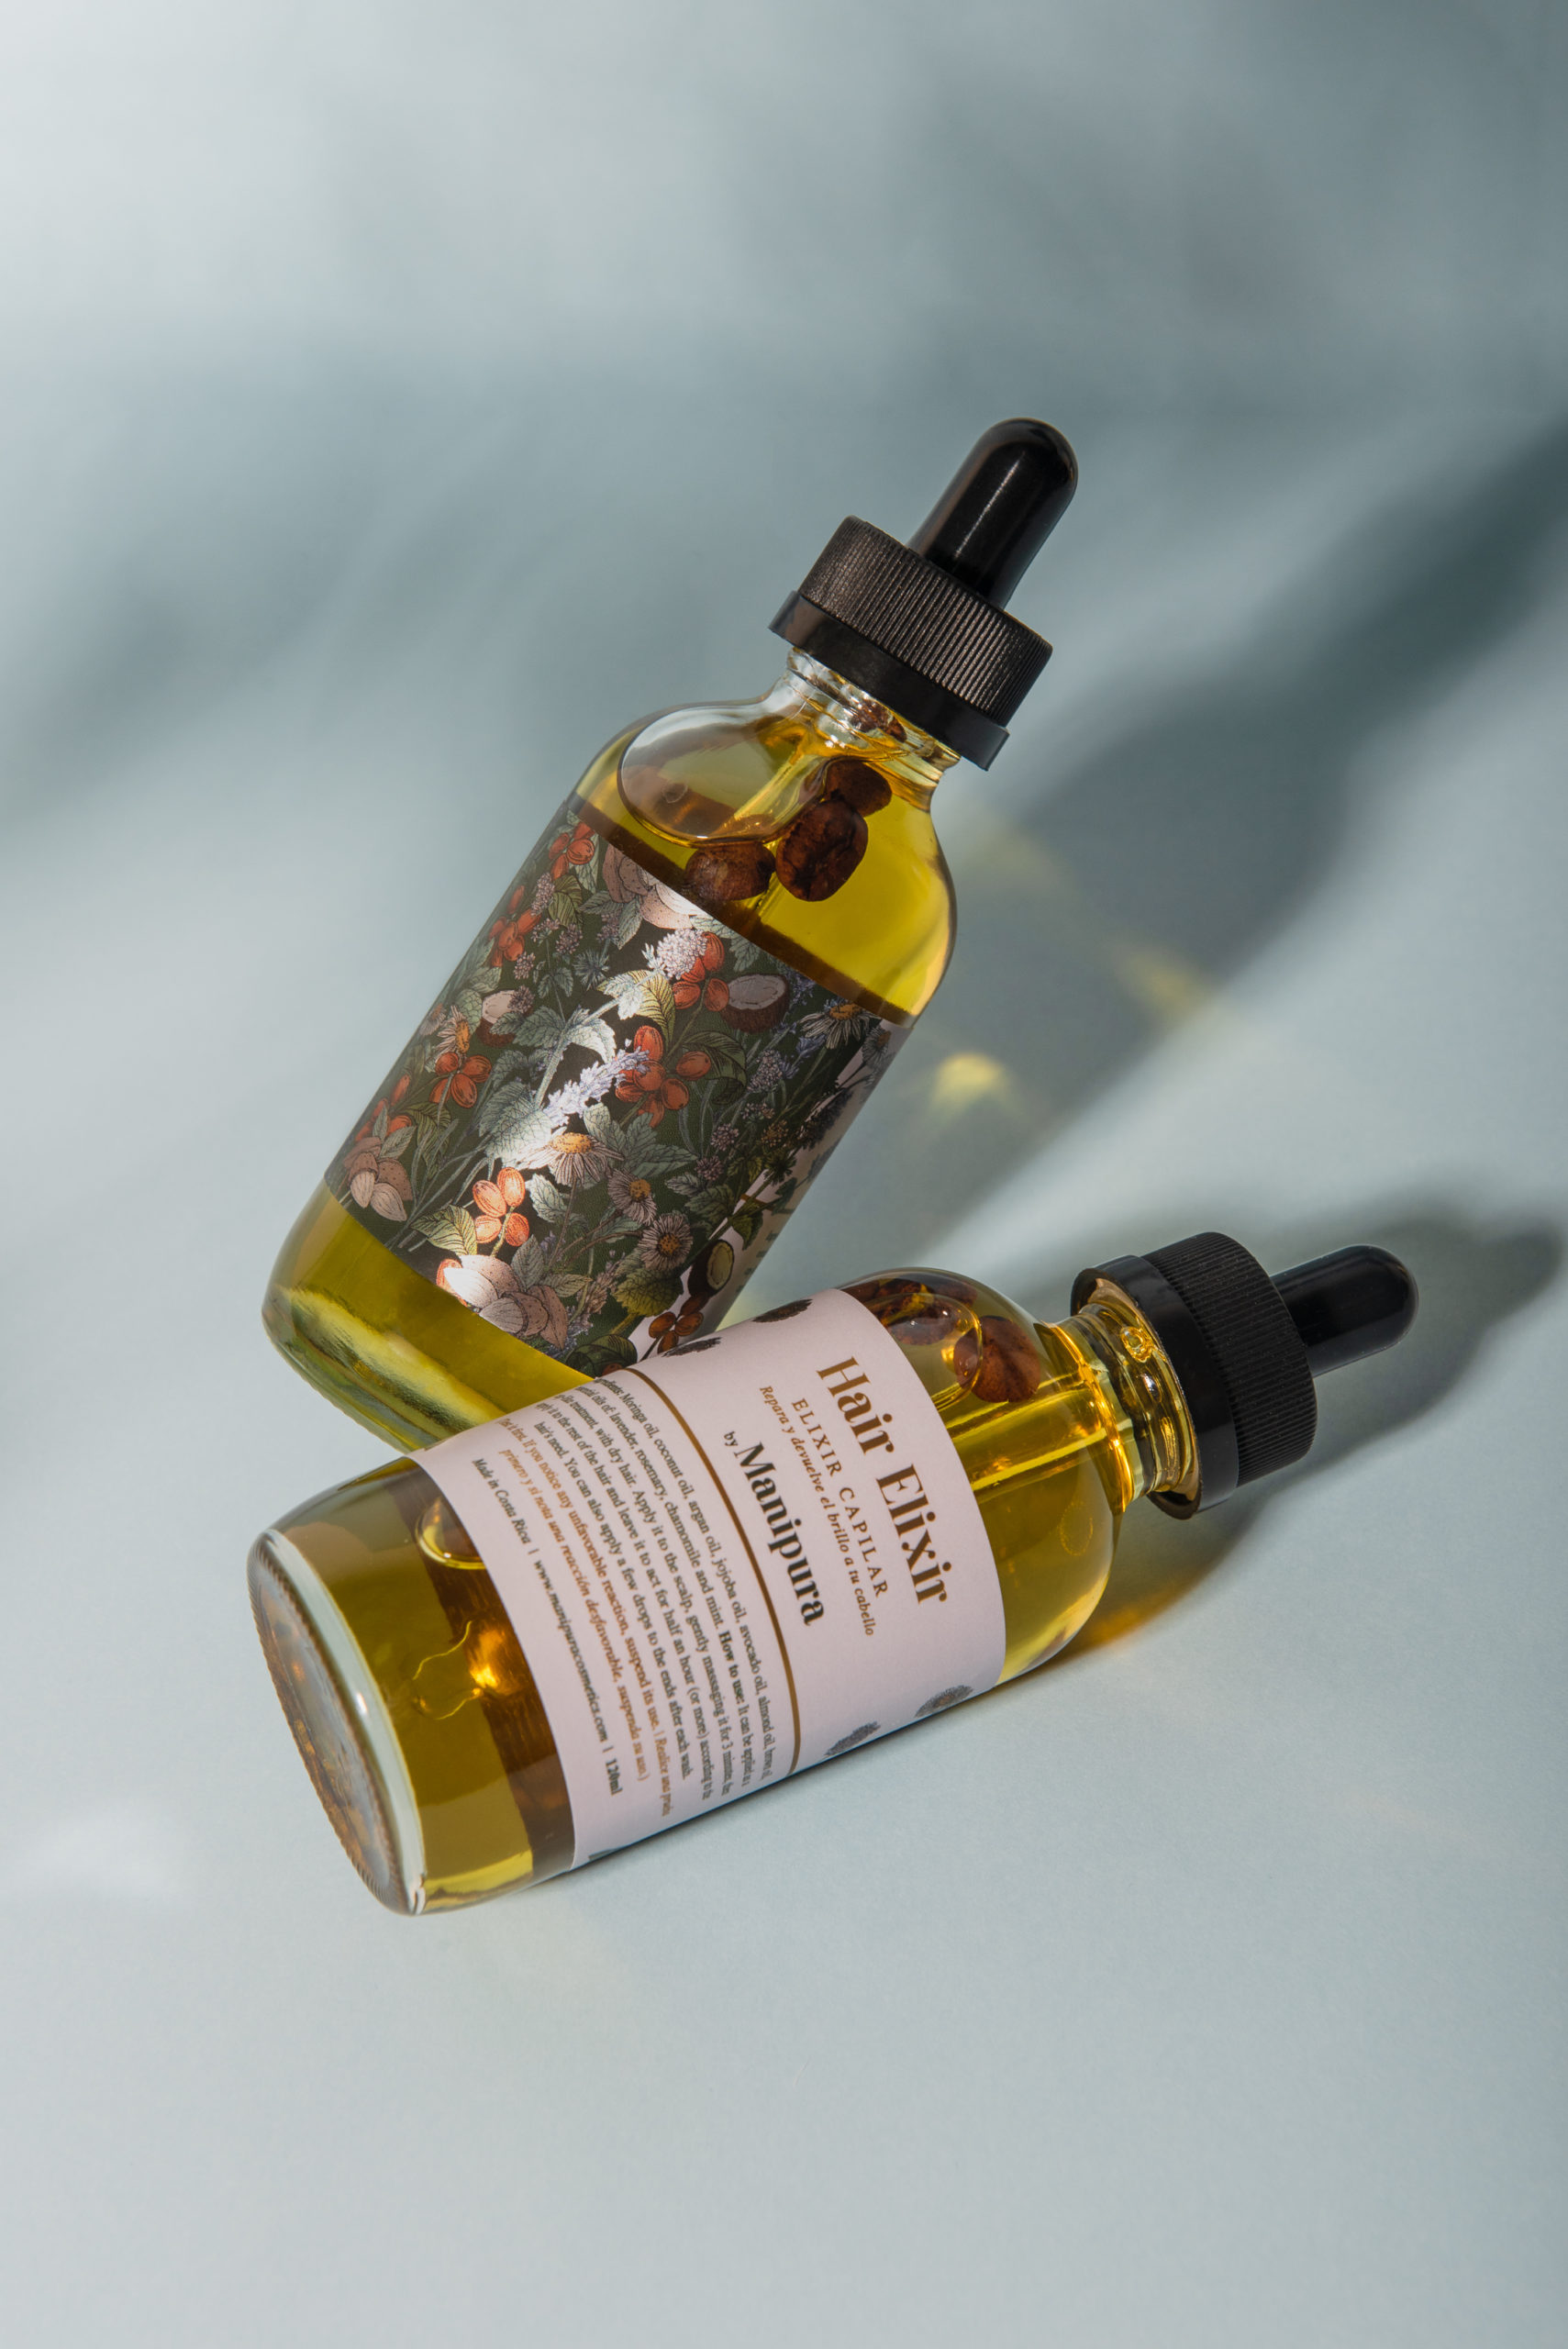 Manipura Cosmética Natural Elixir Capilar/Hair Elixir https://manipuracosmetics.com/product/hair-elixir/